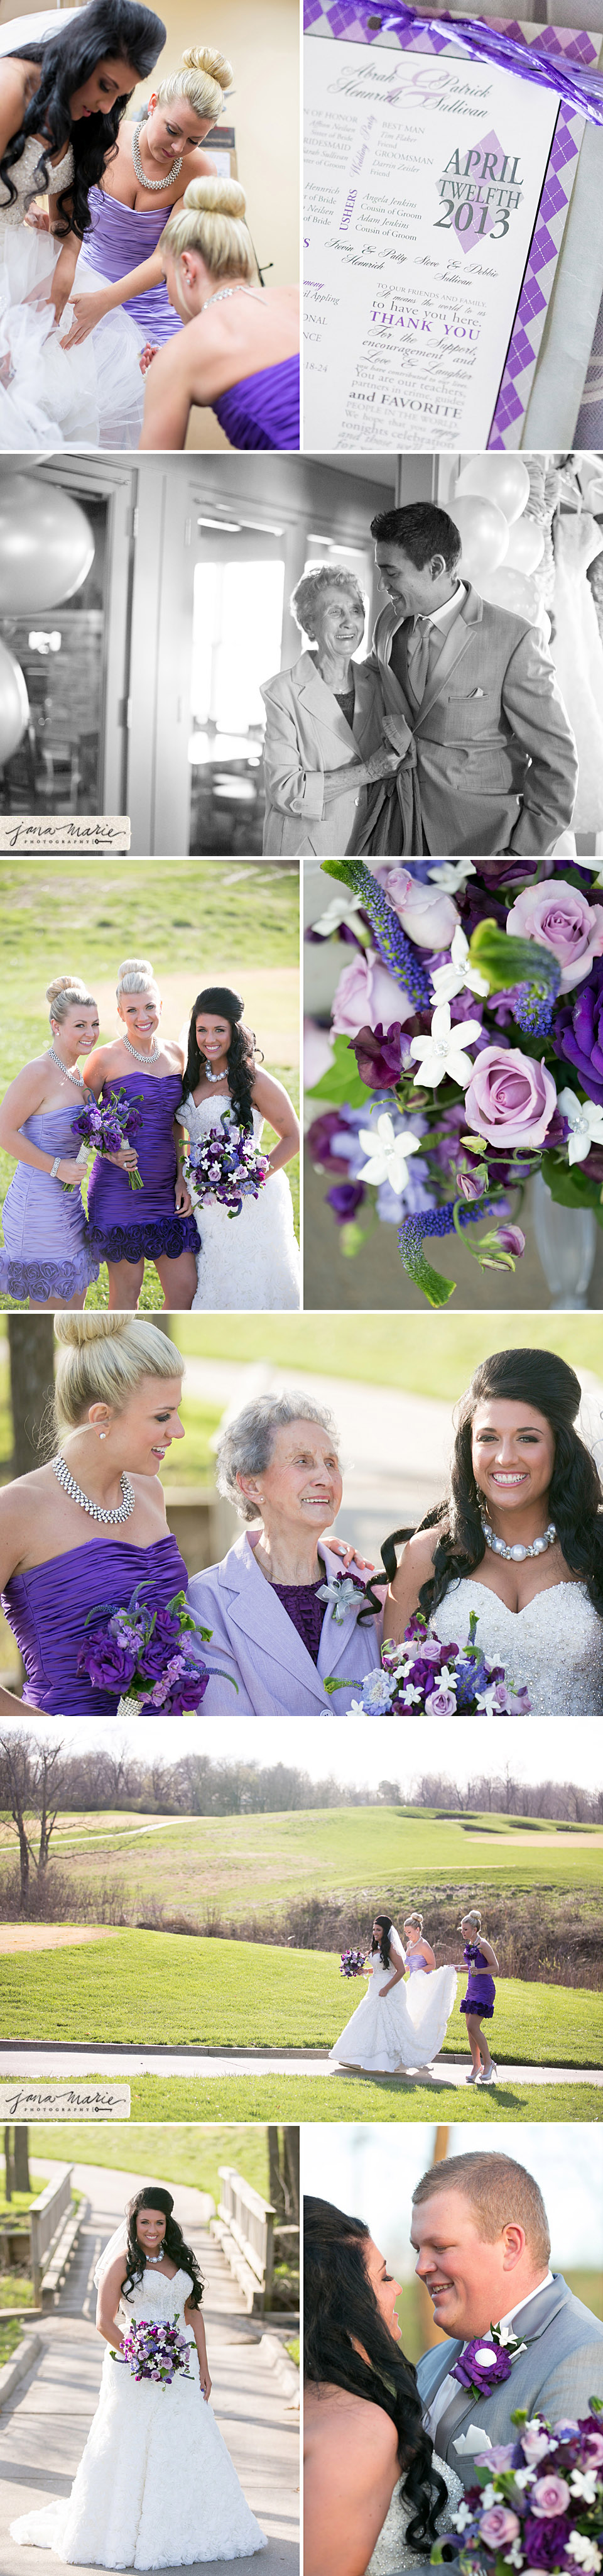 Kansas City weddings, Village Gardens, Drumm Farm Golf Course, Jana Marie Photography, family, bridesmaids